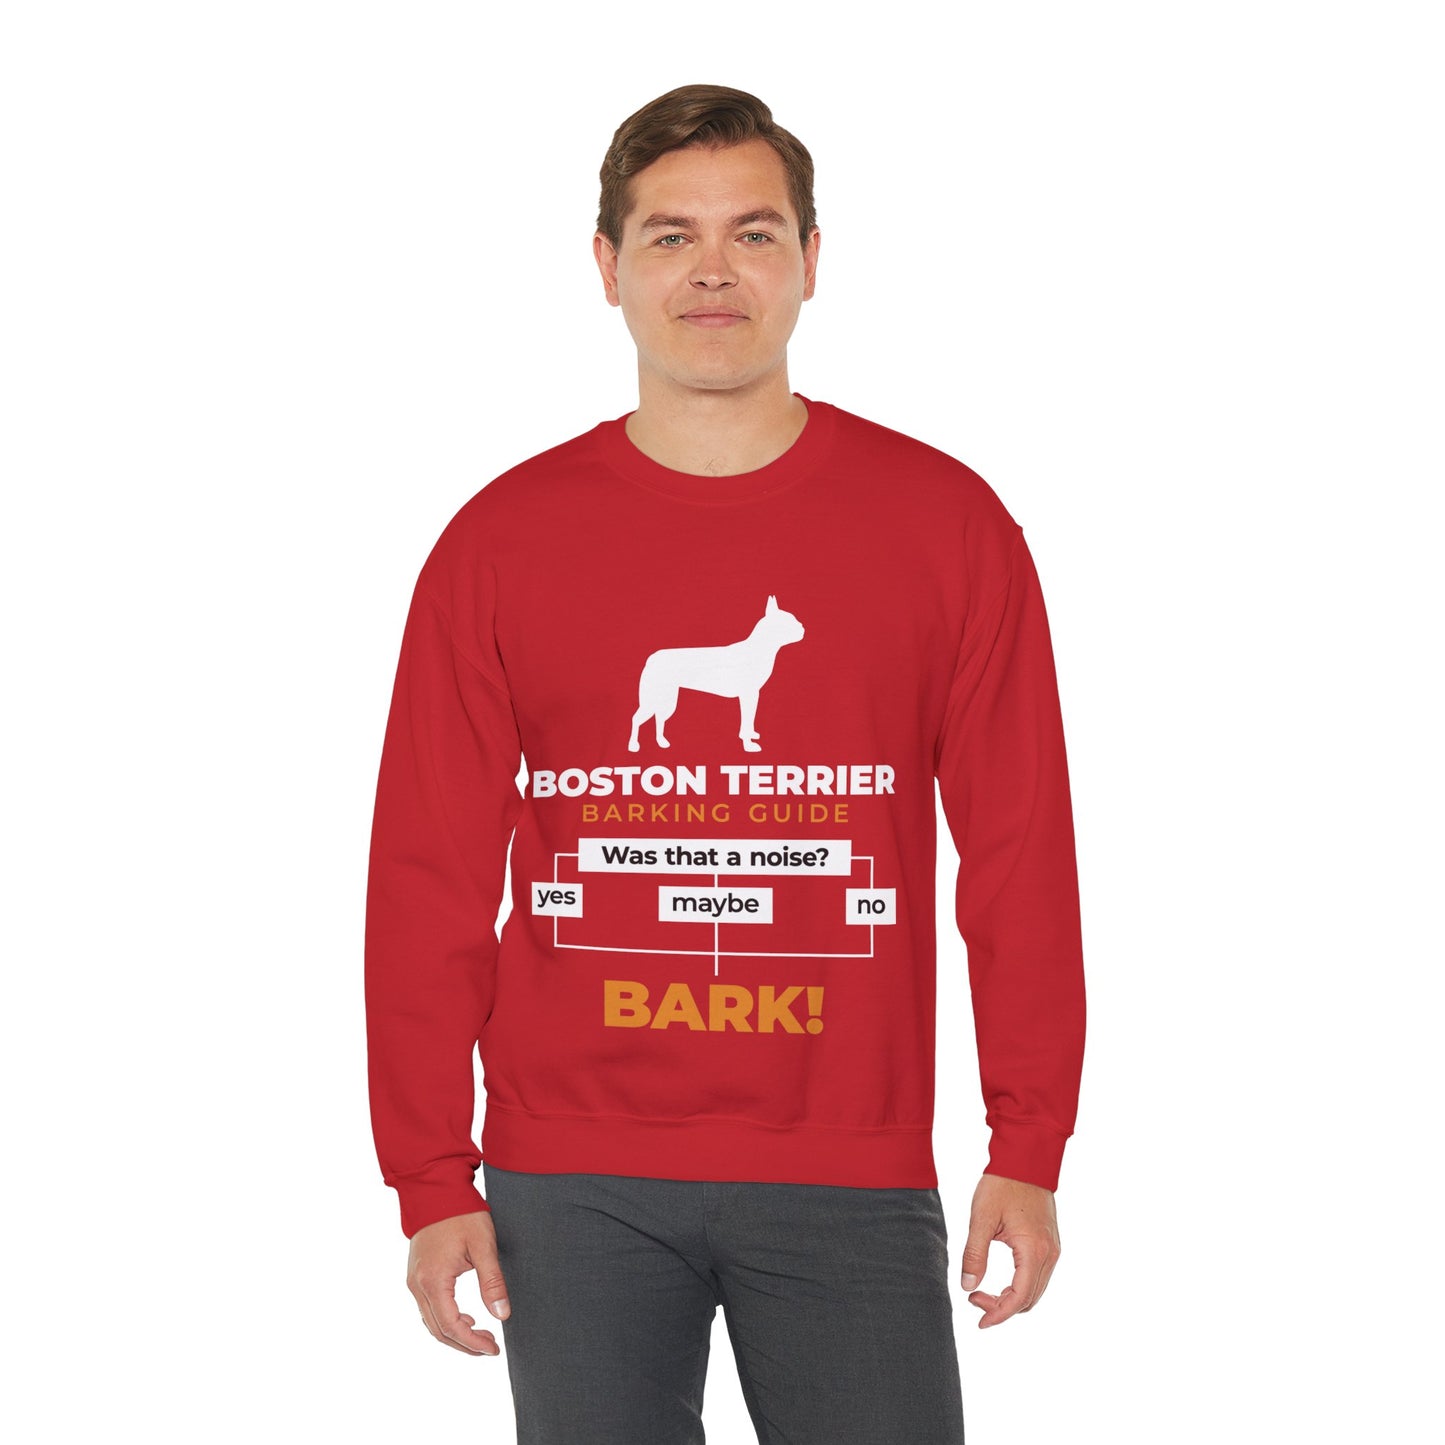 Piper - Unisex Sweatshirt for Boston Terrier lovers